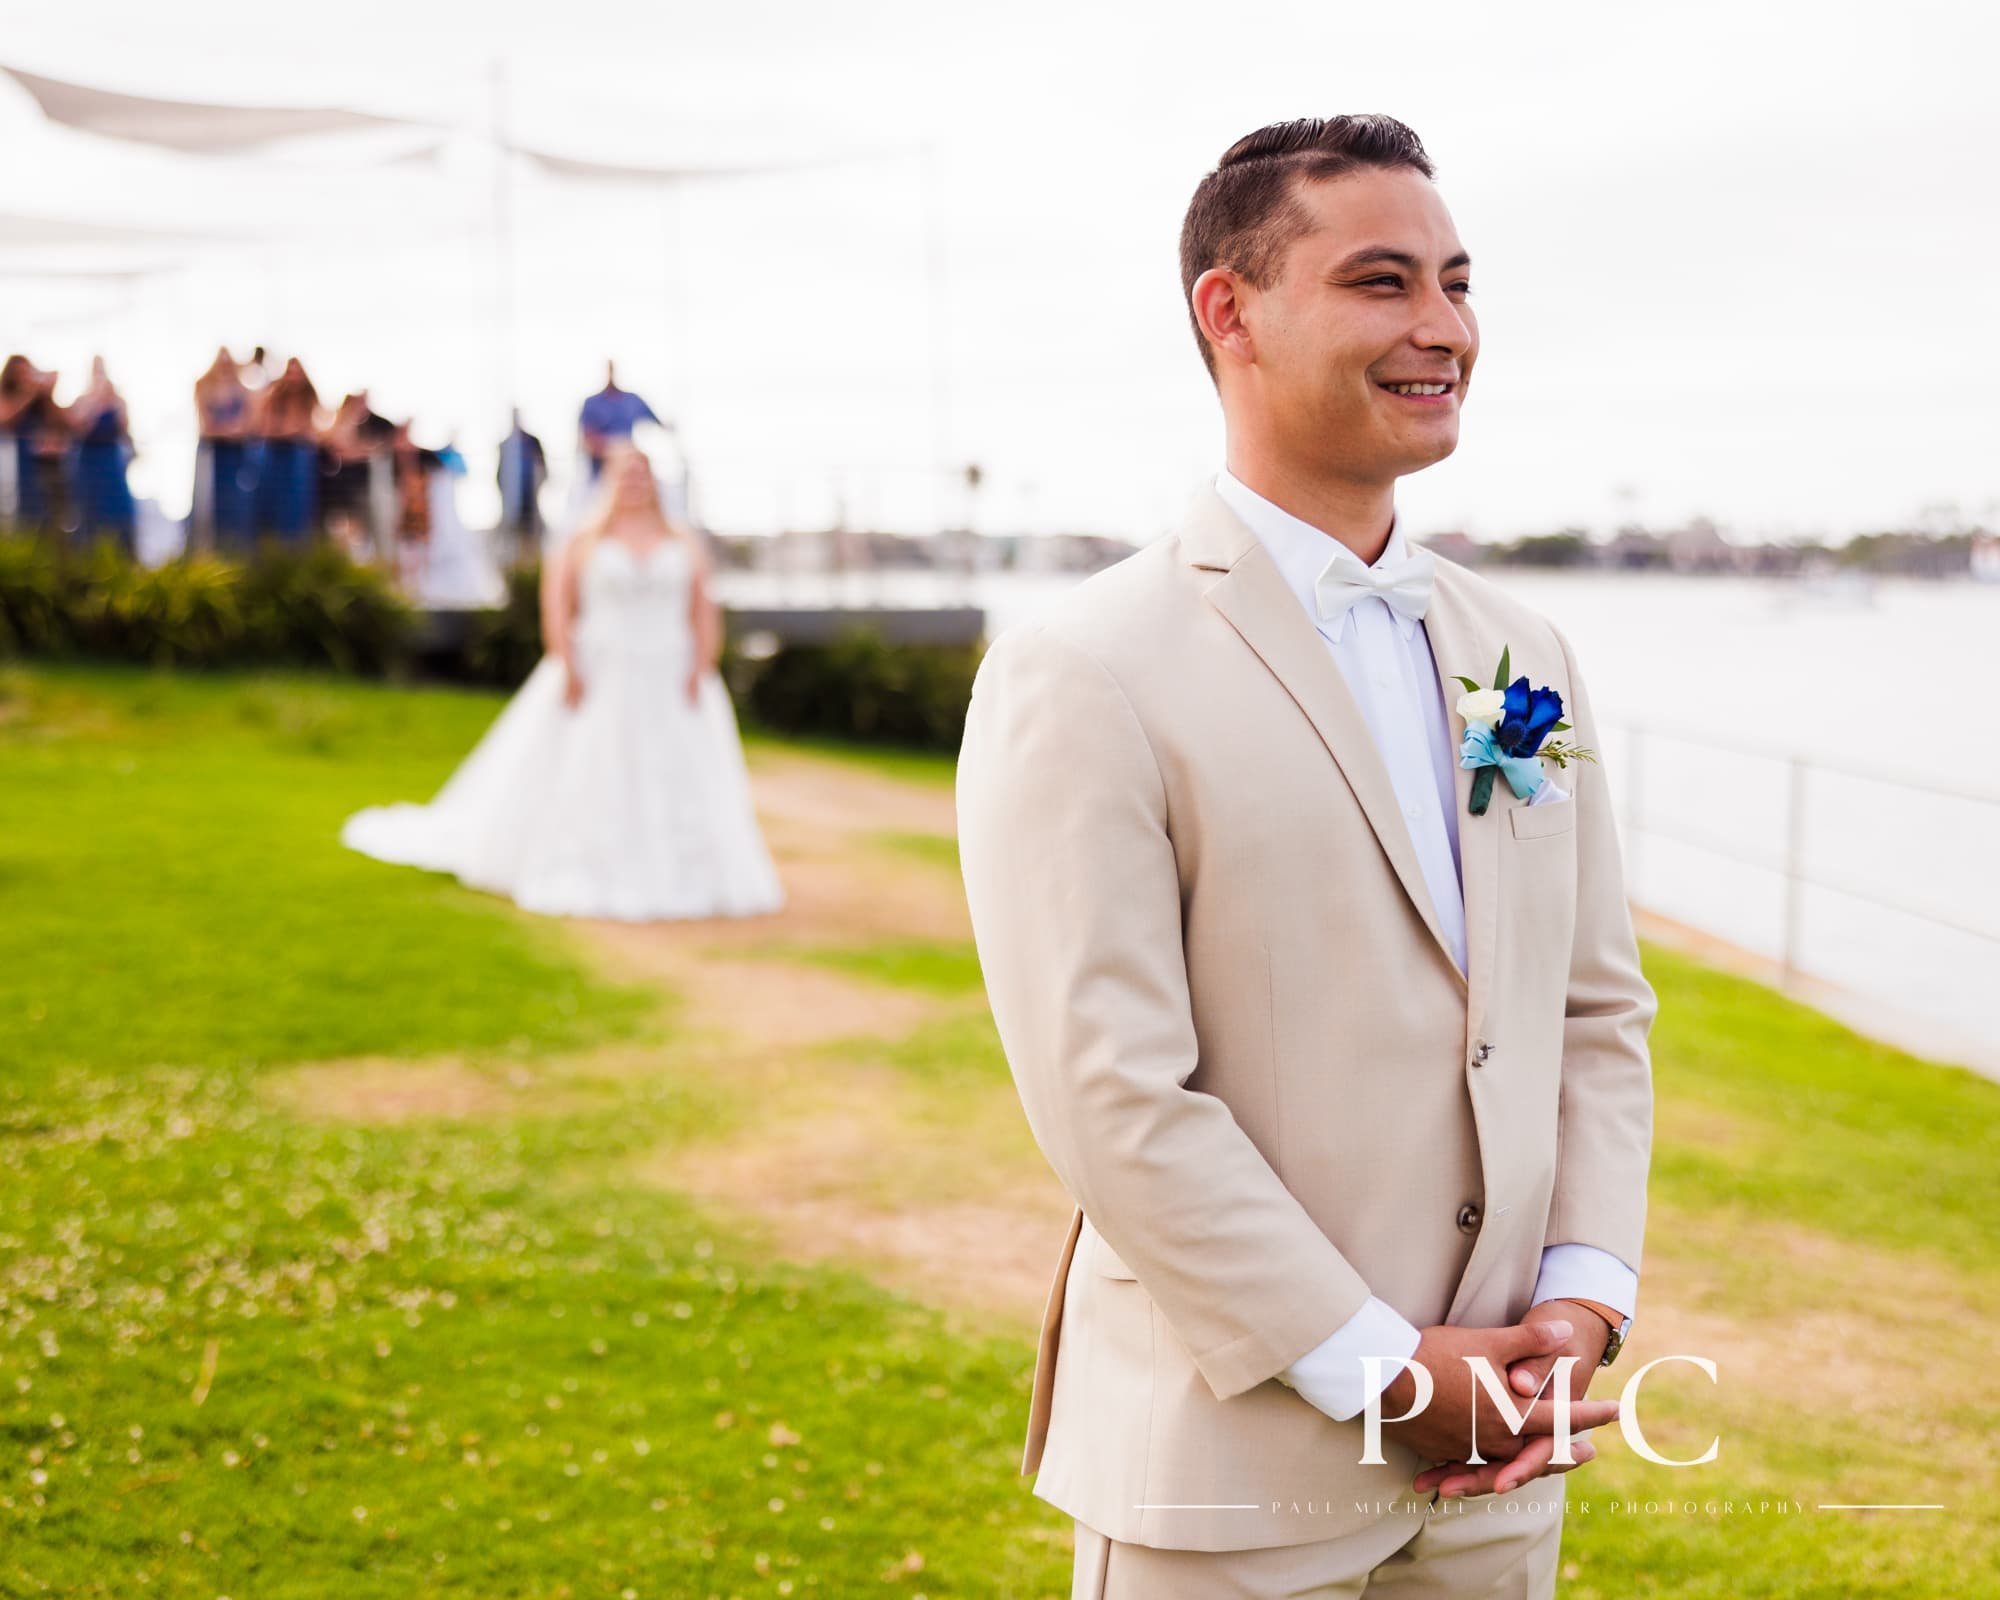 Tower Beach Club - Mission Bay - Best San Diego Wedding Photographer-5.jpg